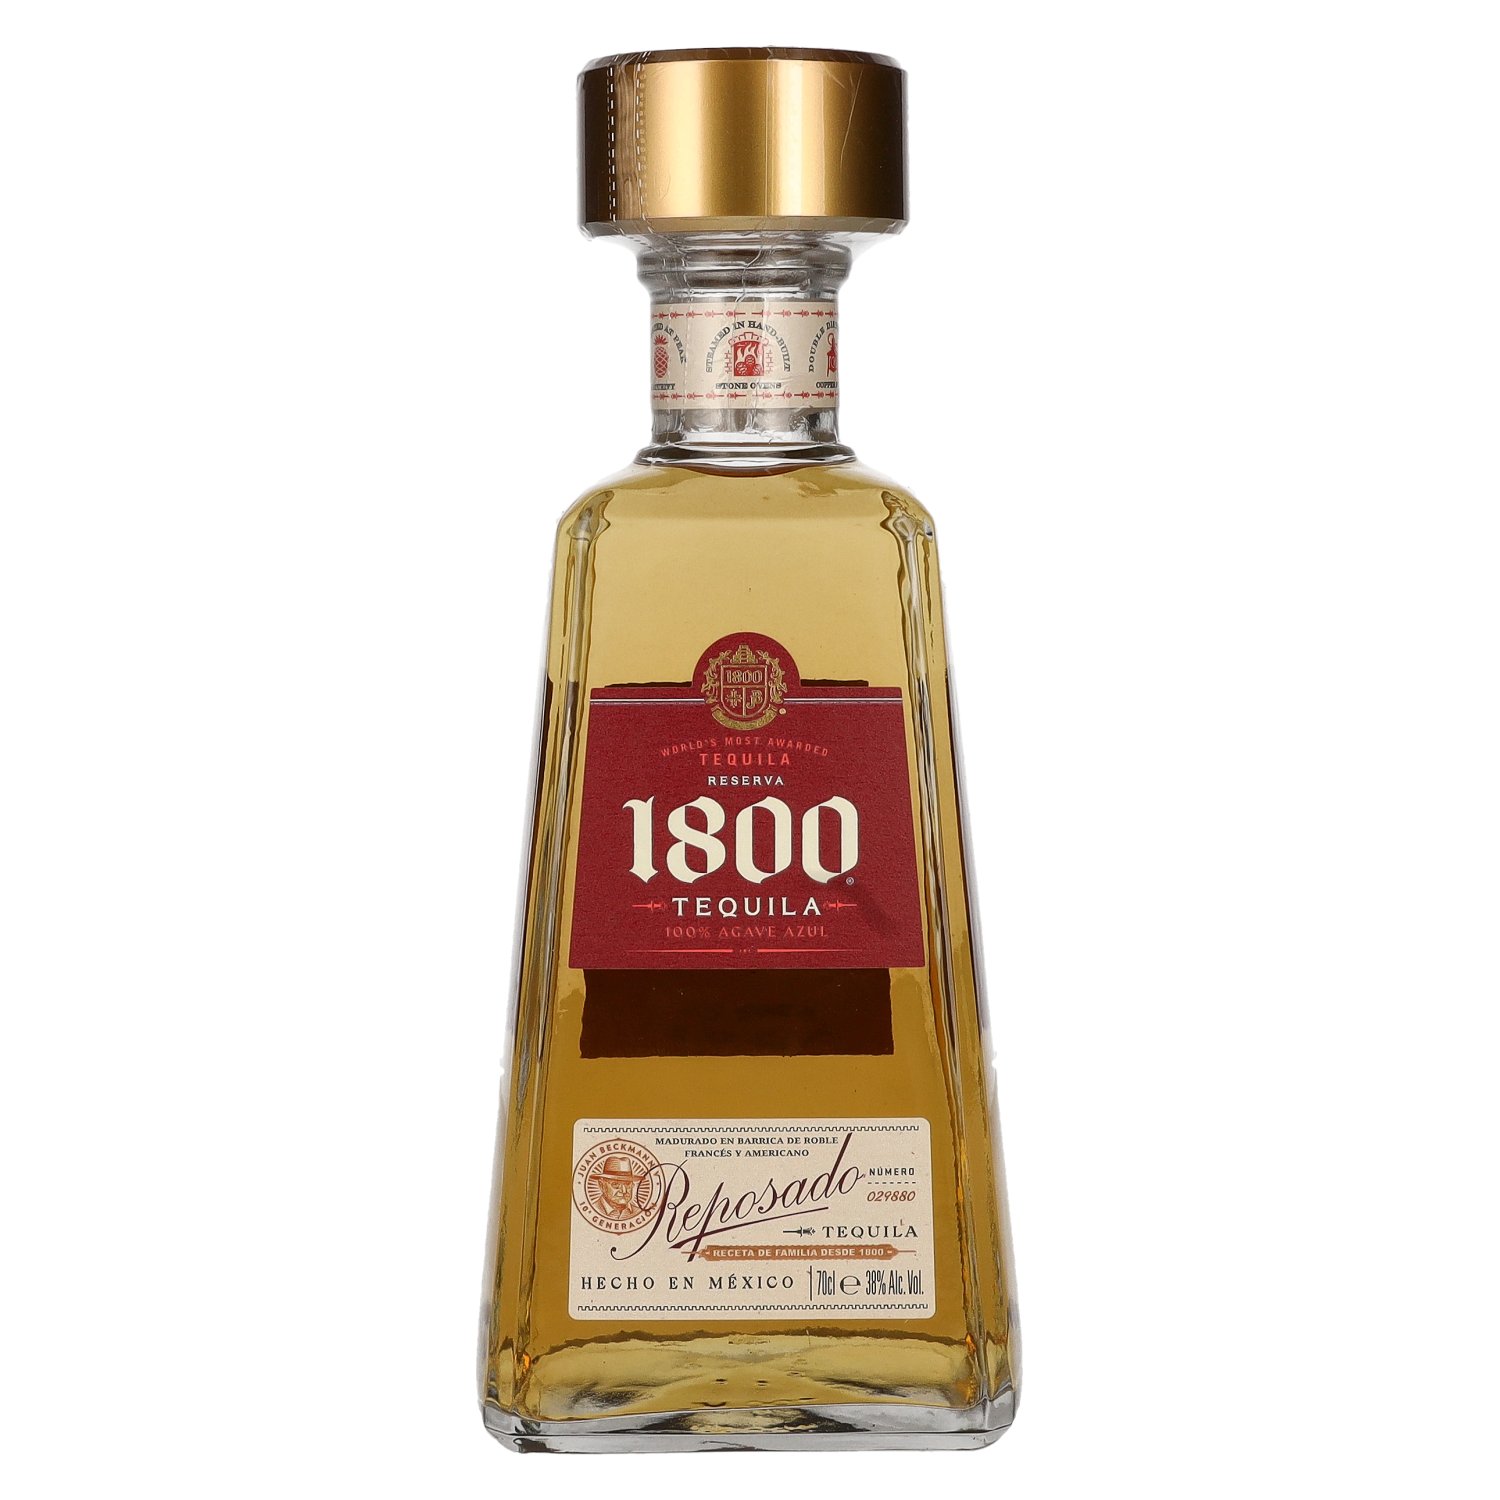 1800 Tequila Reserva 0,7l Agave Vol. 100% REPOSADO 38